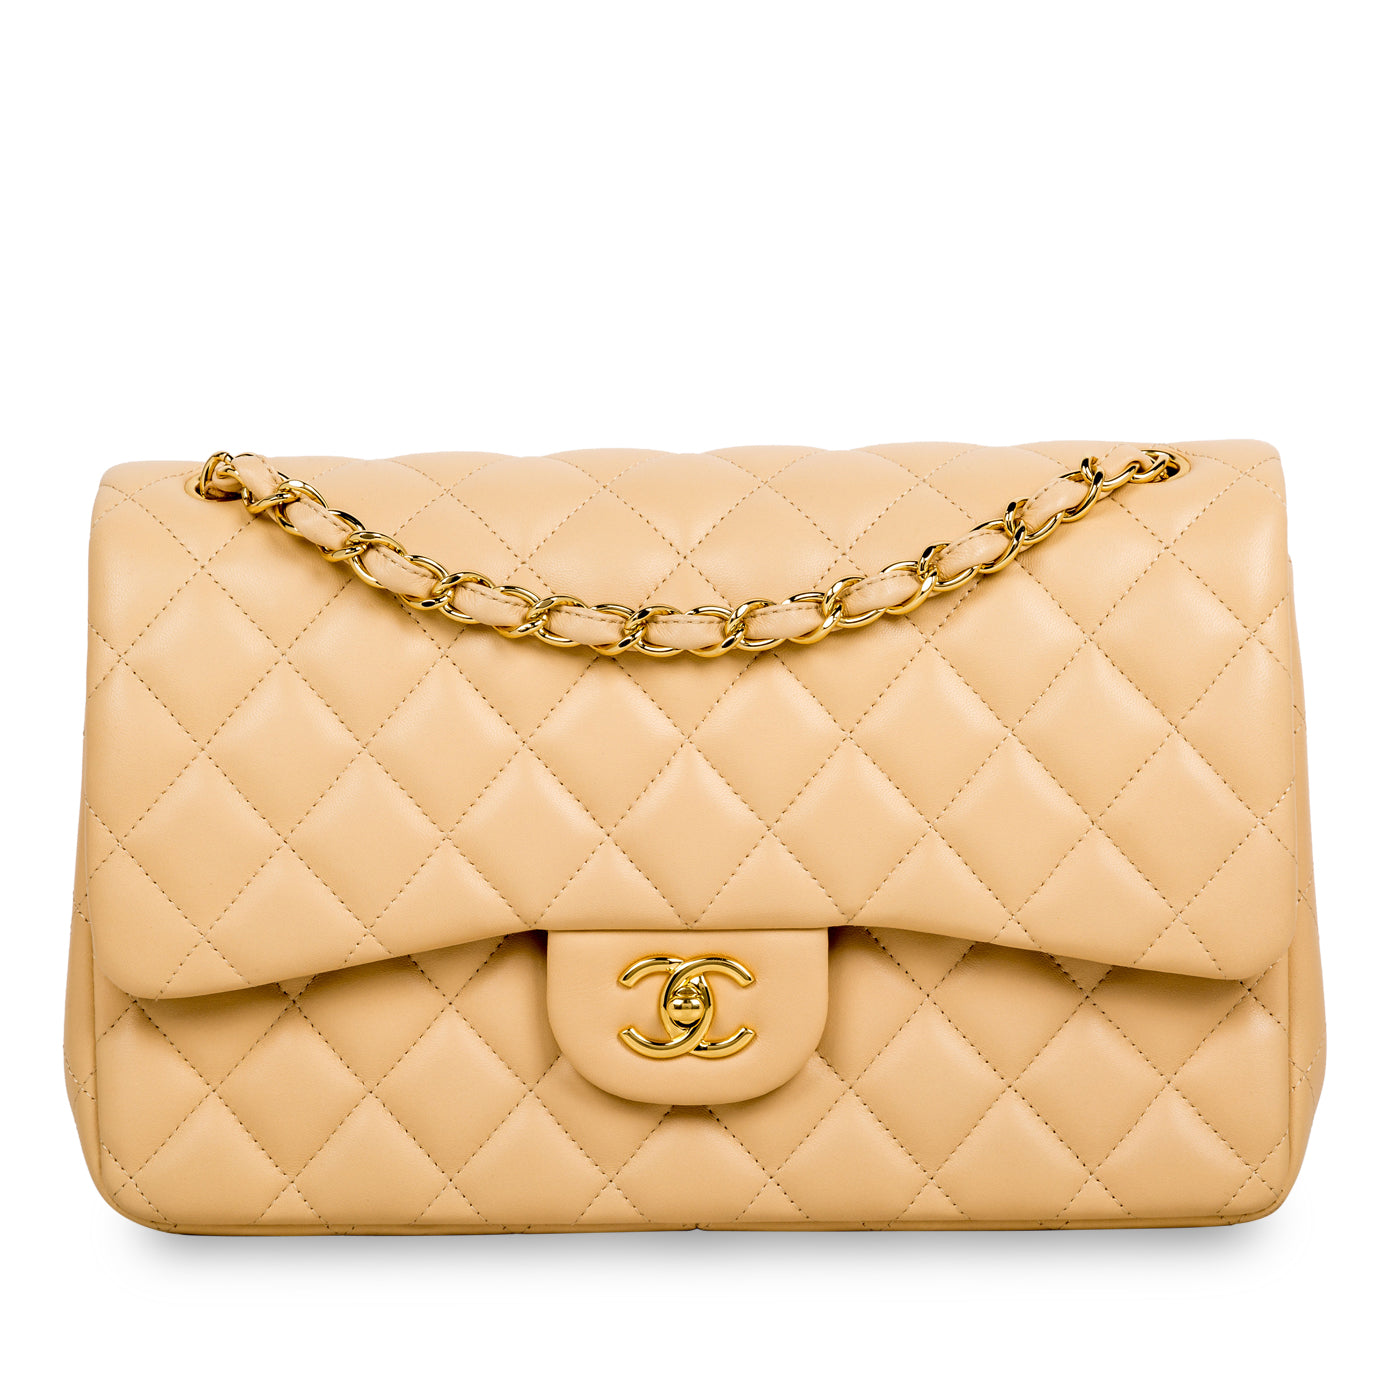 Chanel - Classic Flap Bag - Jumbo - Beige Lambskin - GHW